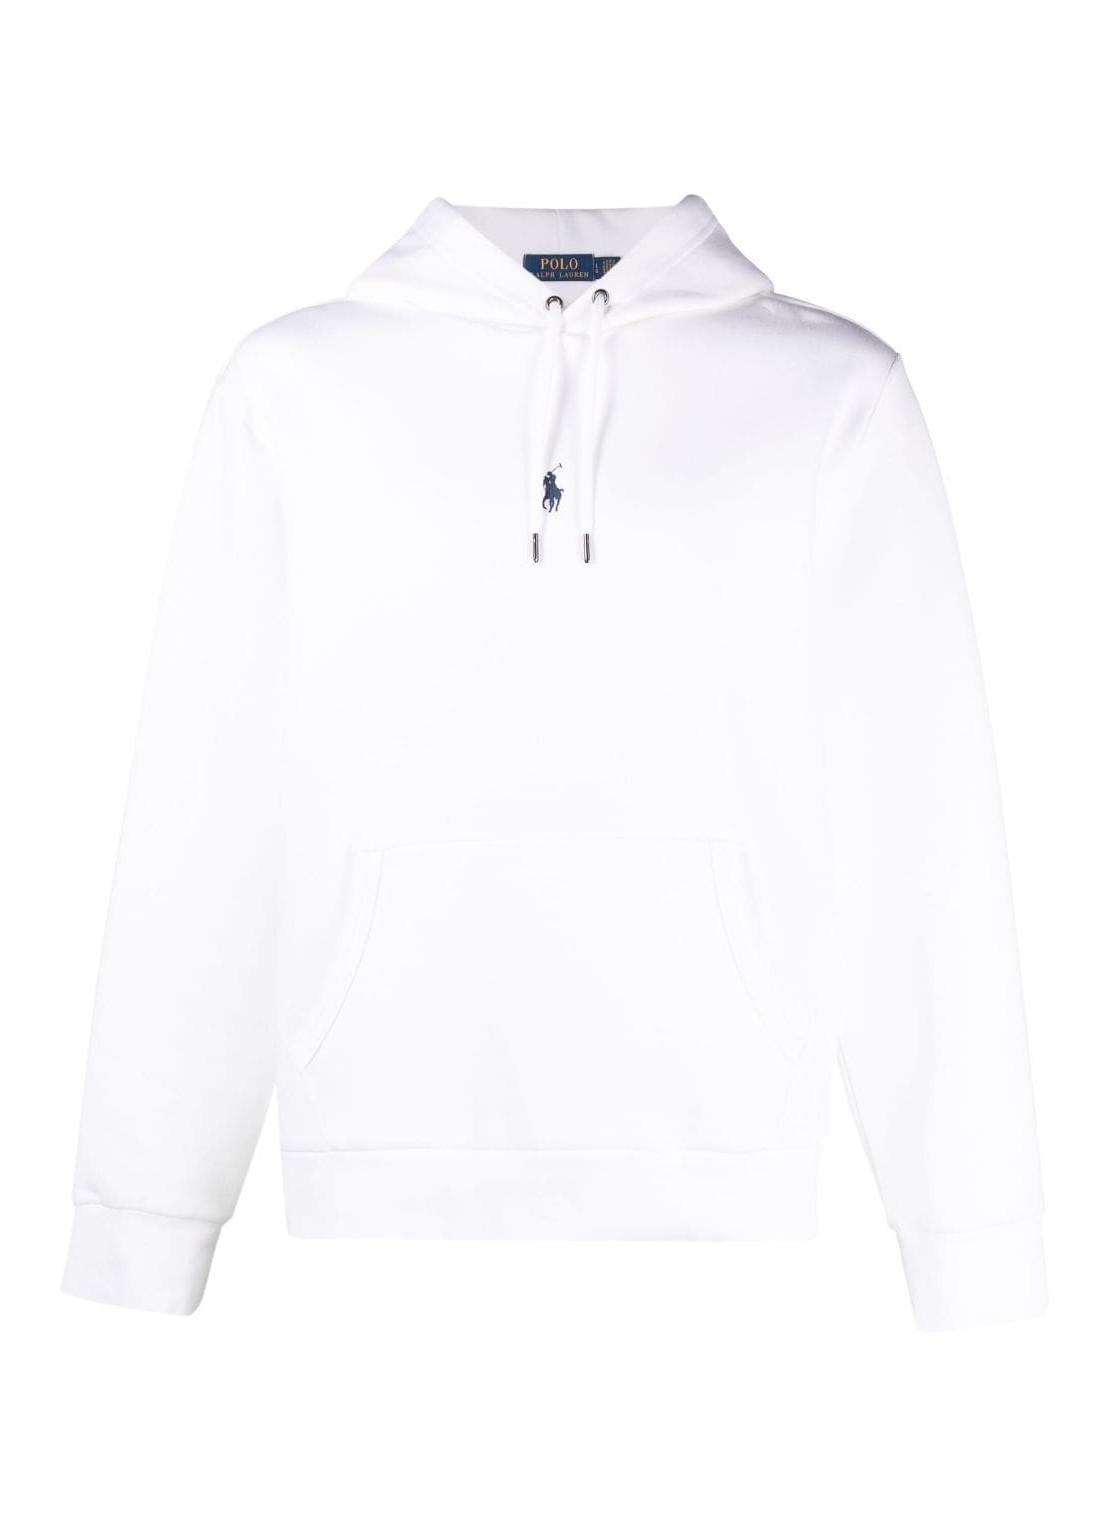 Sudadera polo ralph lauren sweater man lspohoodm2-long sleevesweatshirt 710881506010 white talla bla